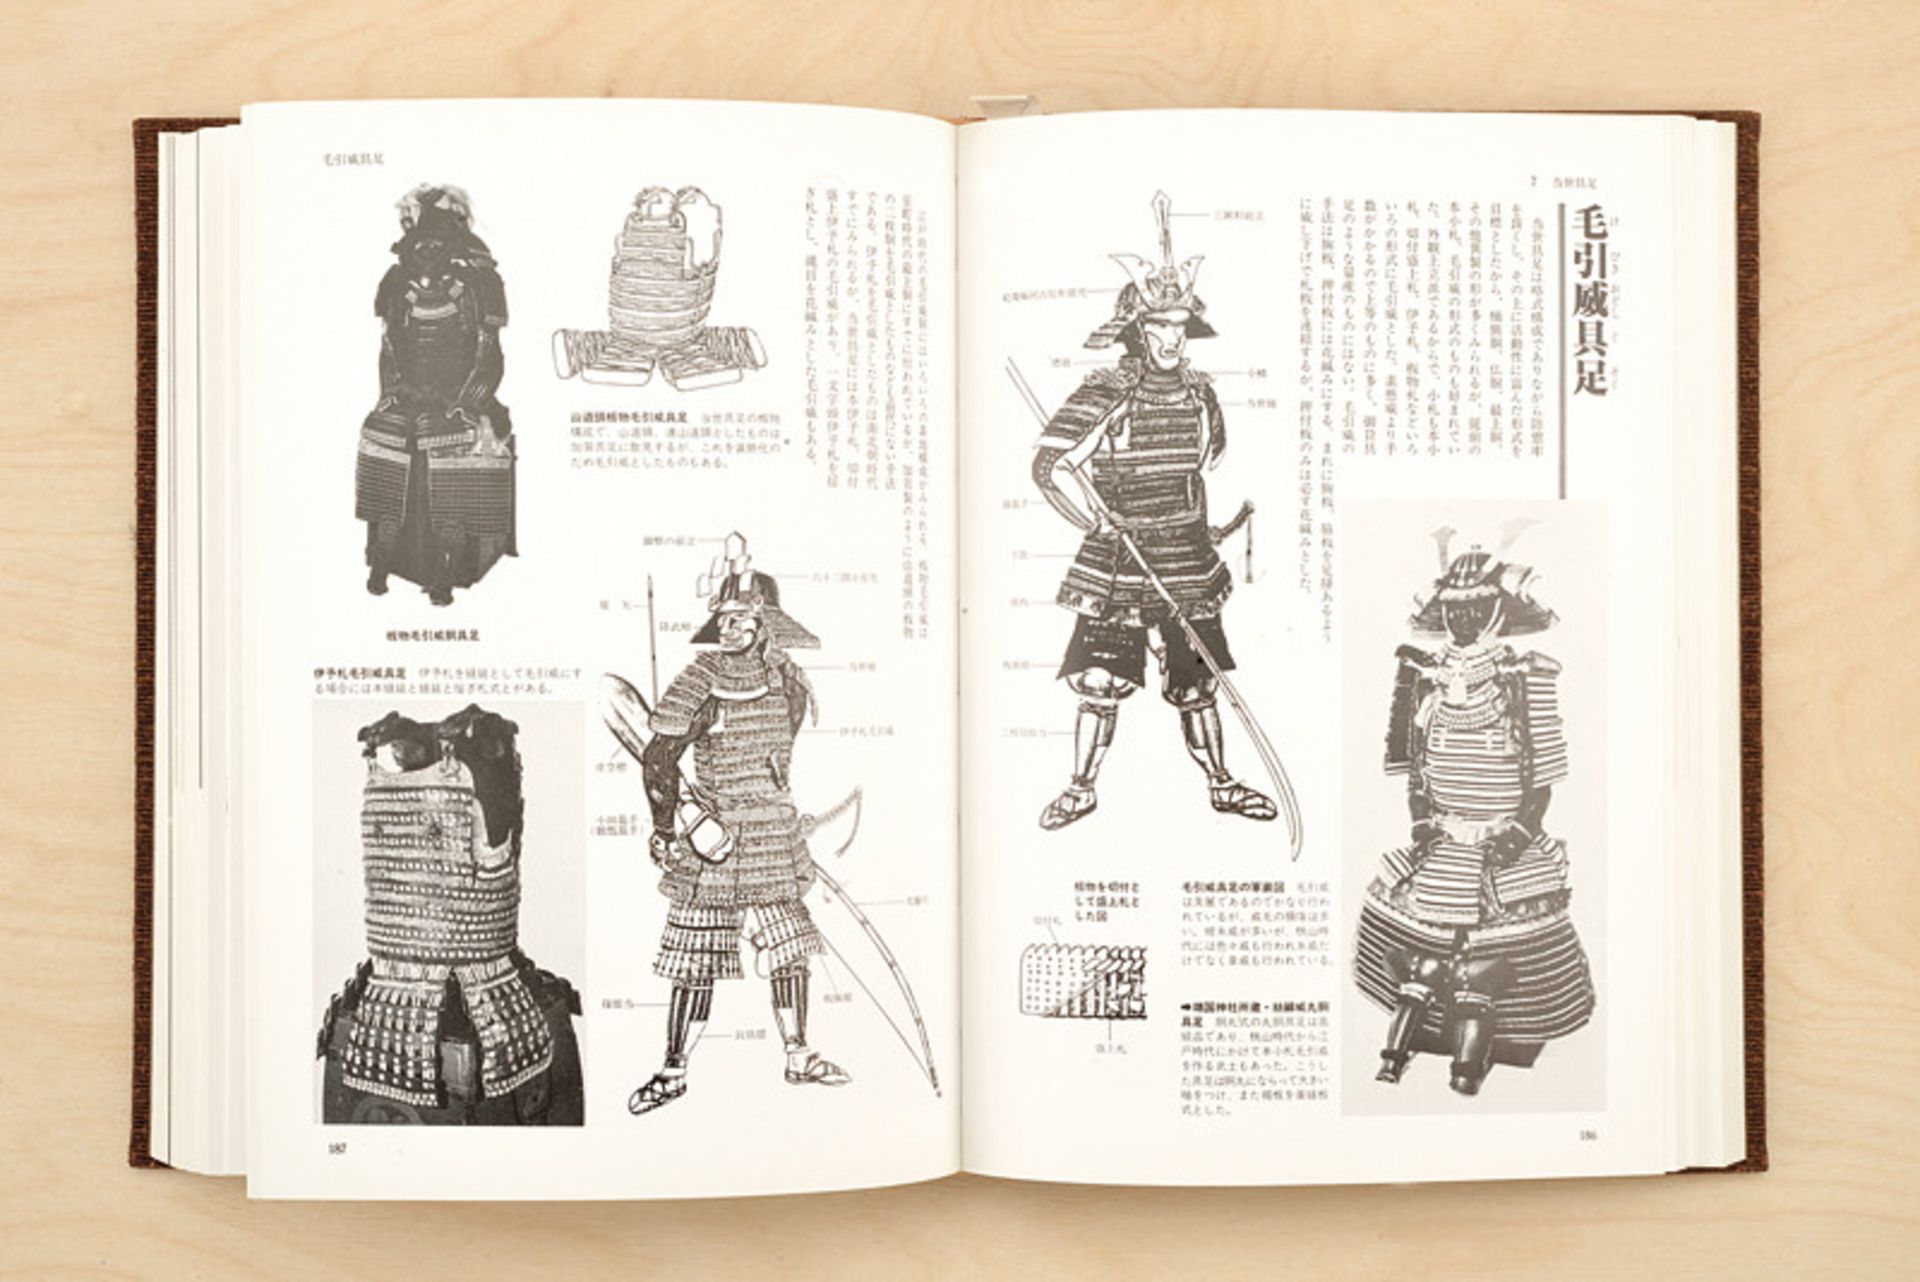 Sasama, Yoshihiko dating: 20th Century provenance: Japan "Nihon no Katchu Bugu Jiten" (Dictionary of - Image 4 of 4